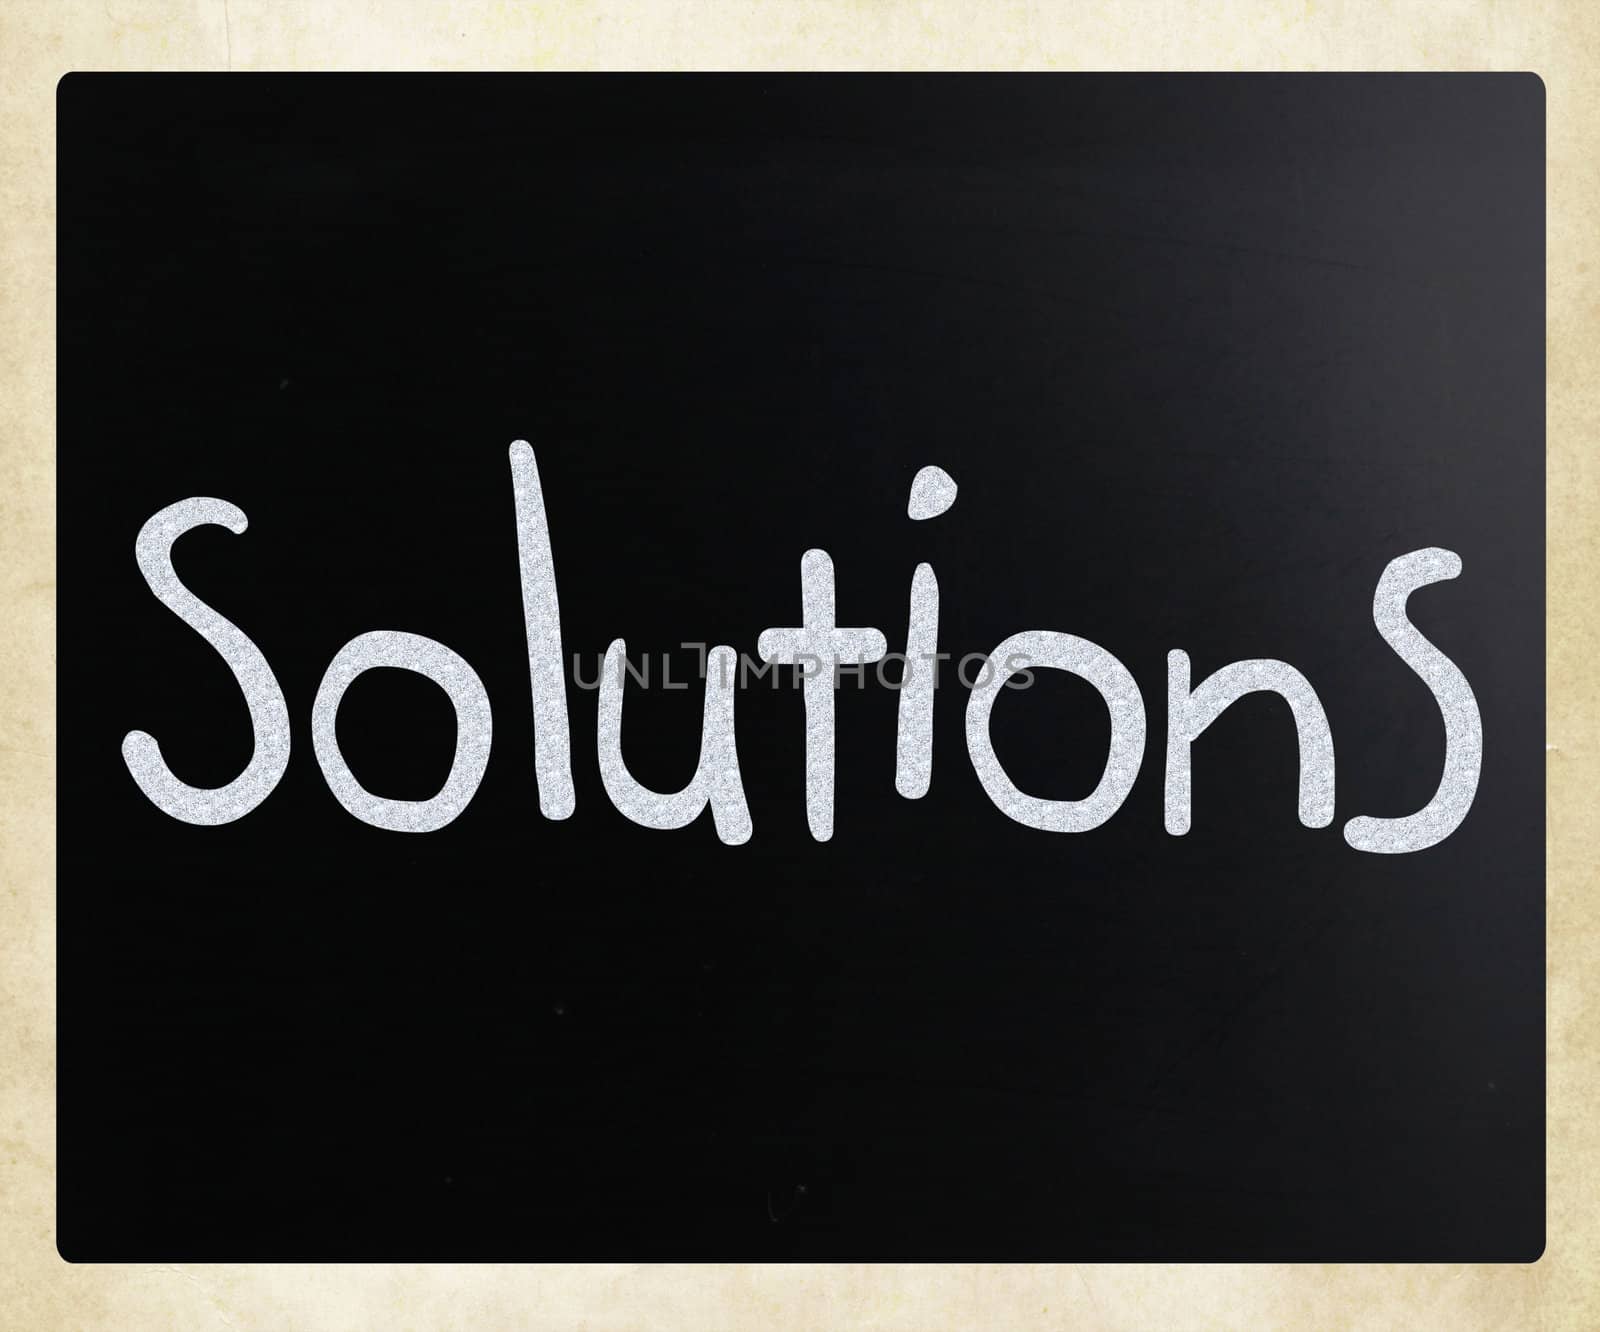 "Solutions" handwritten with white chalk on a blackboard